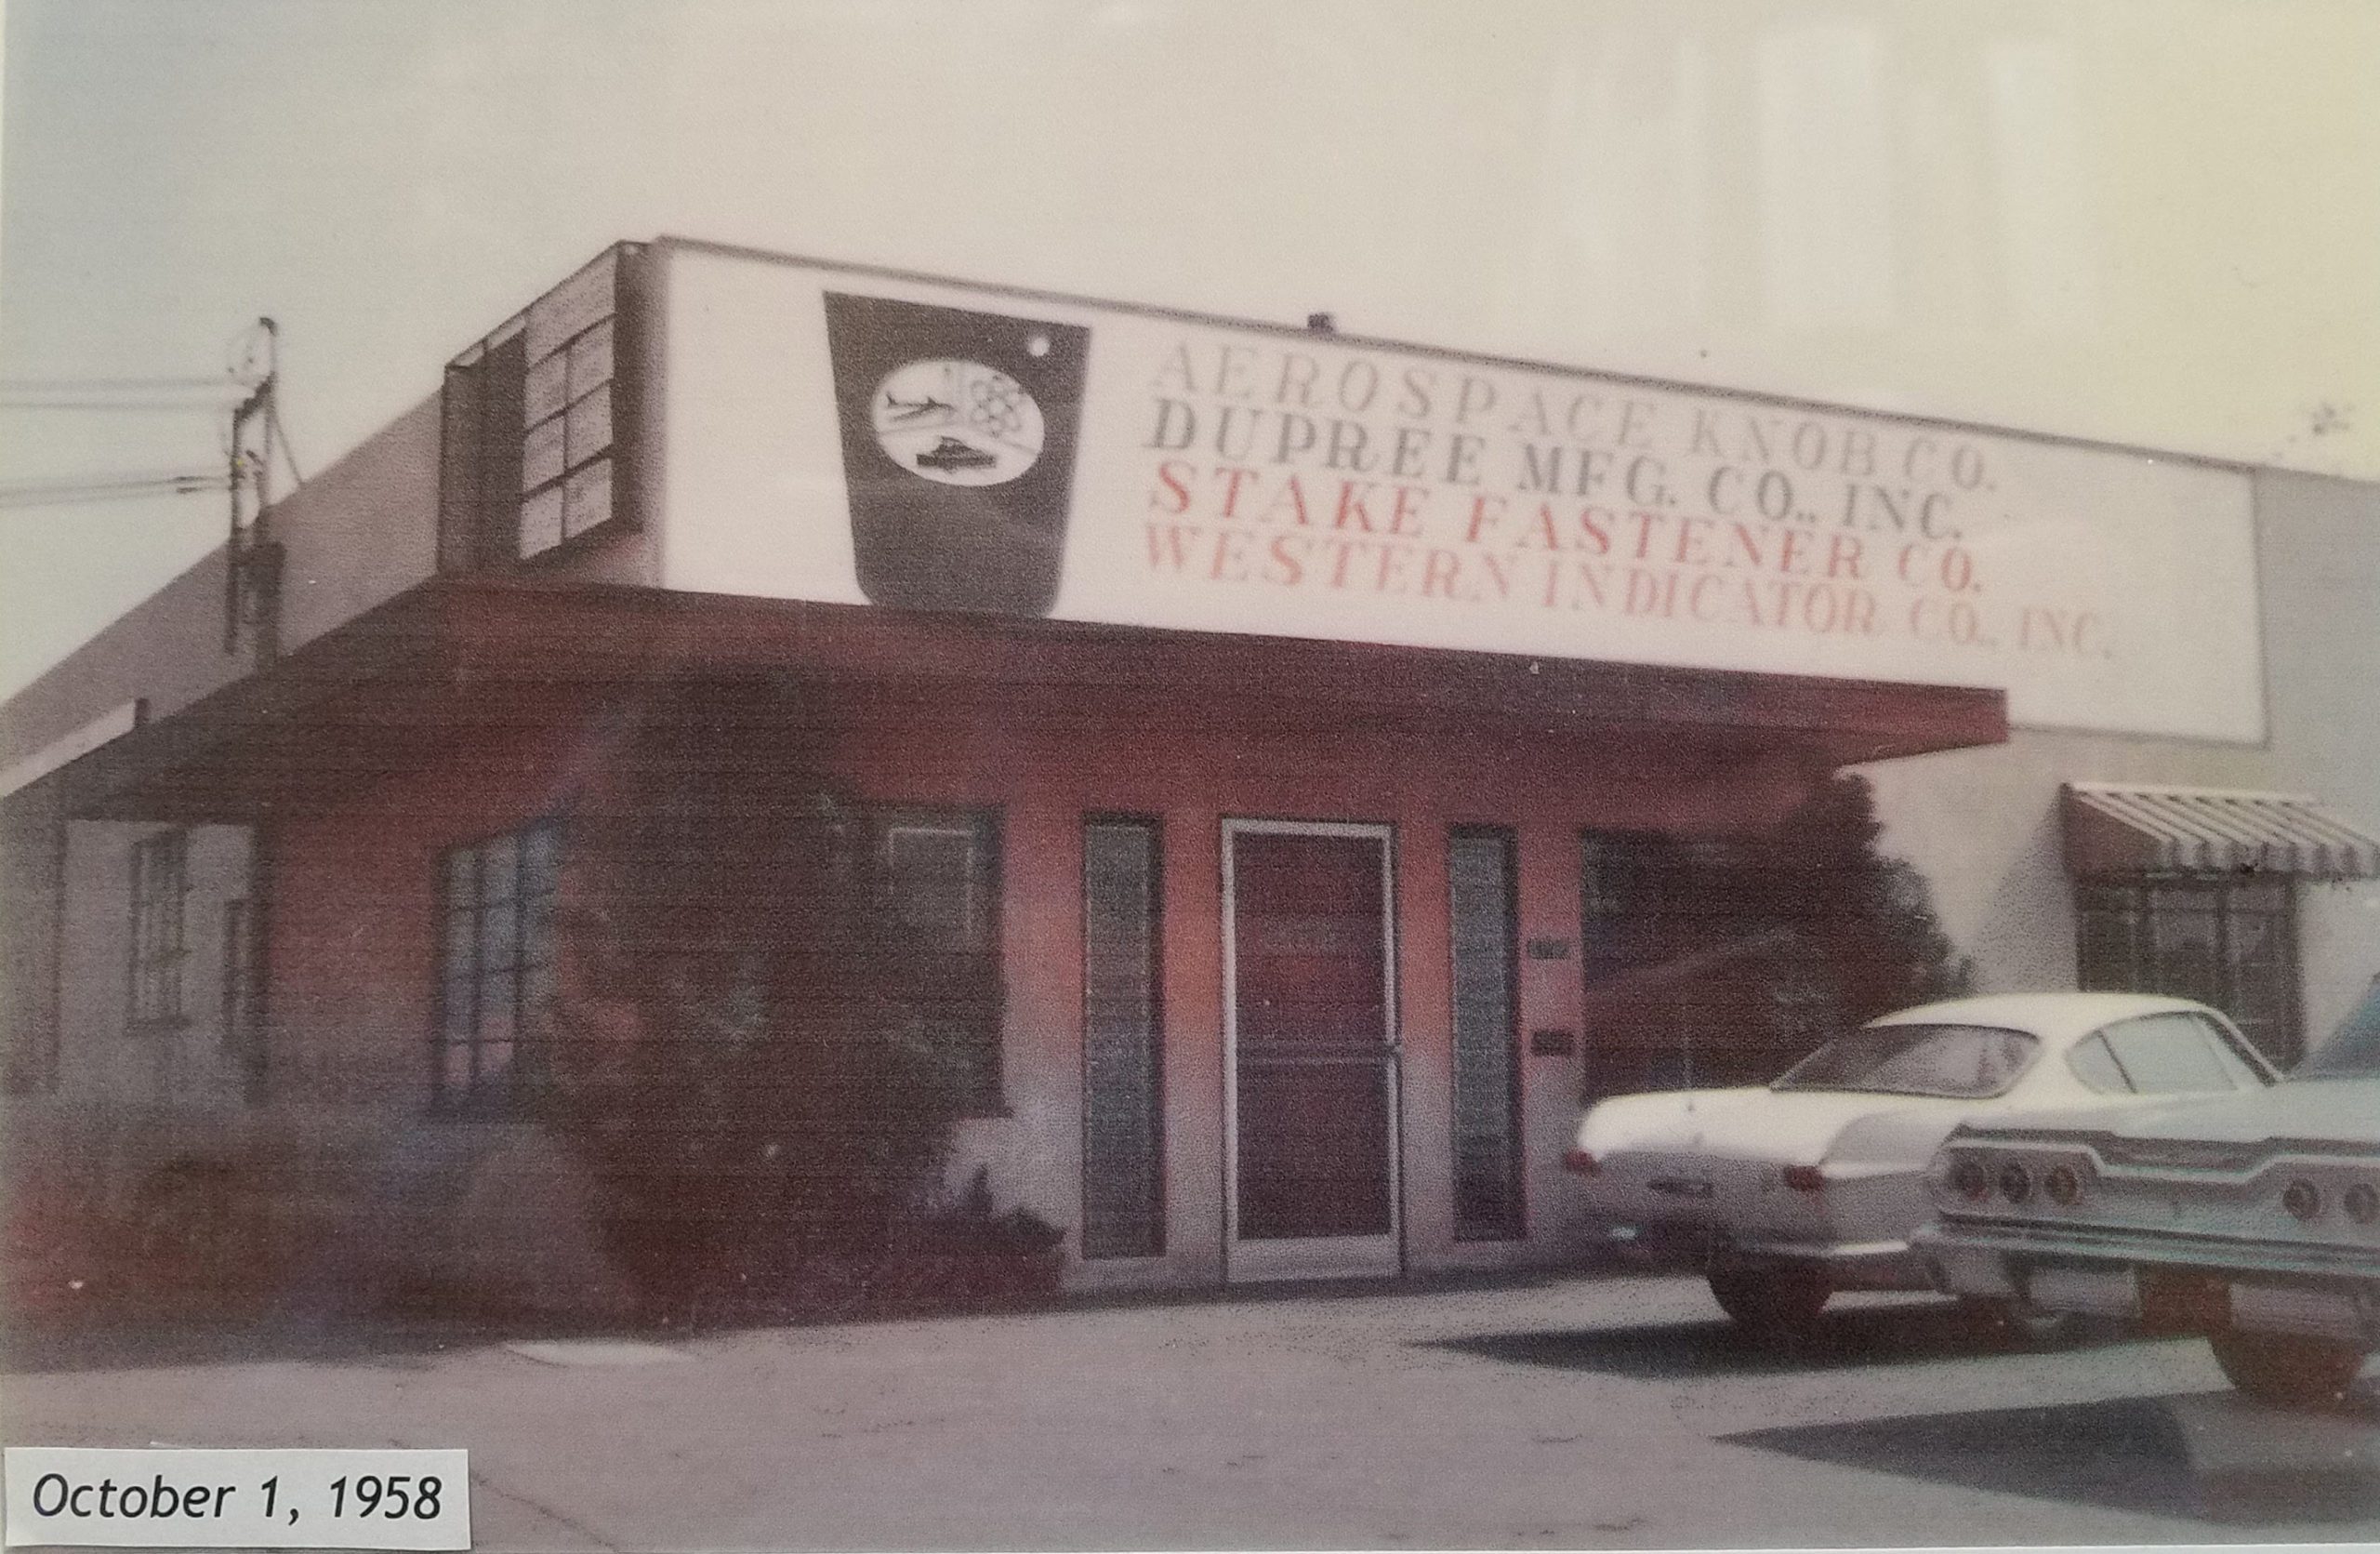 Original building for Stake Fastener Co.